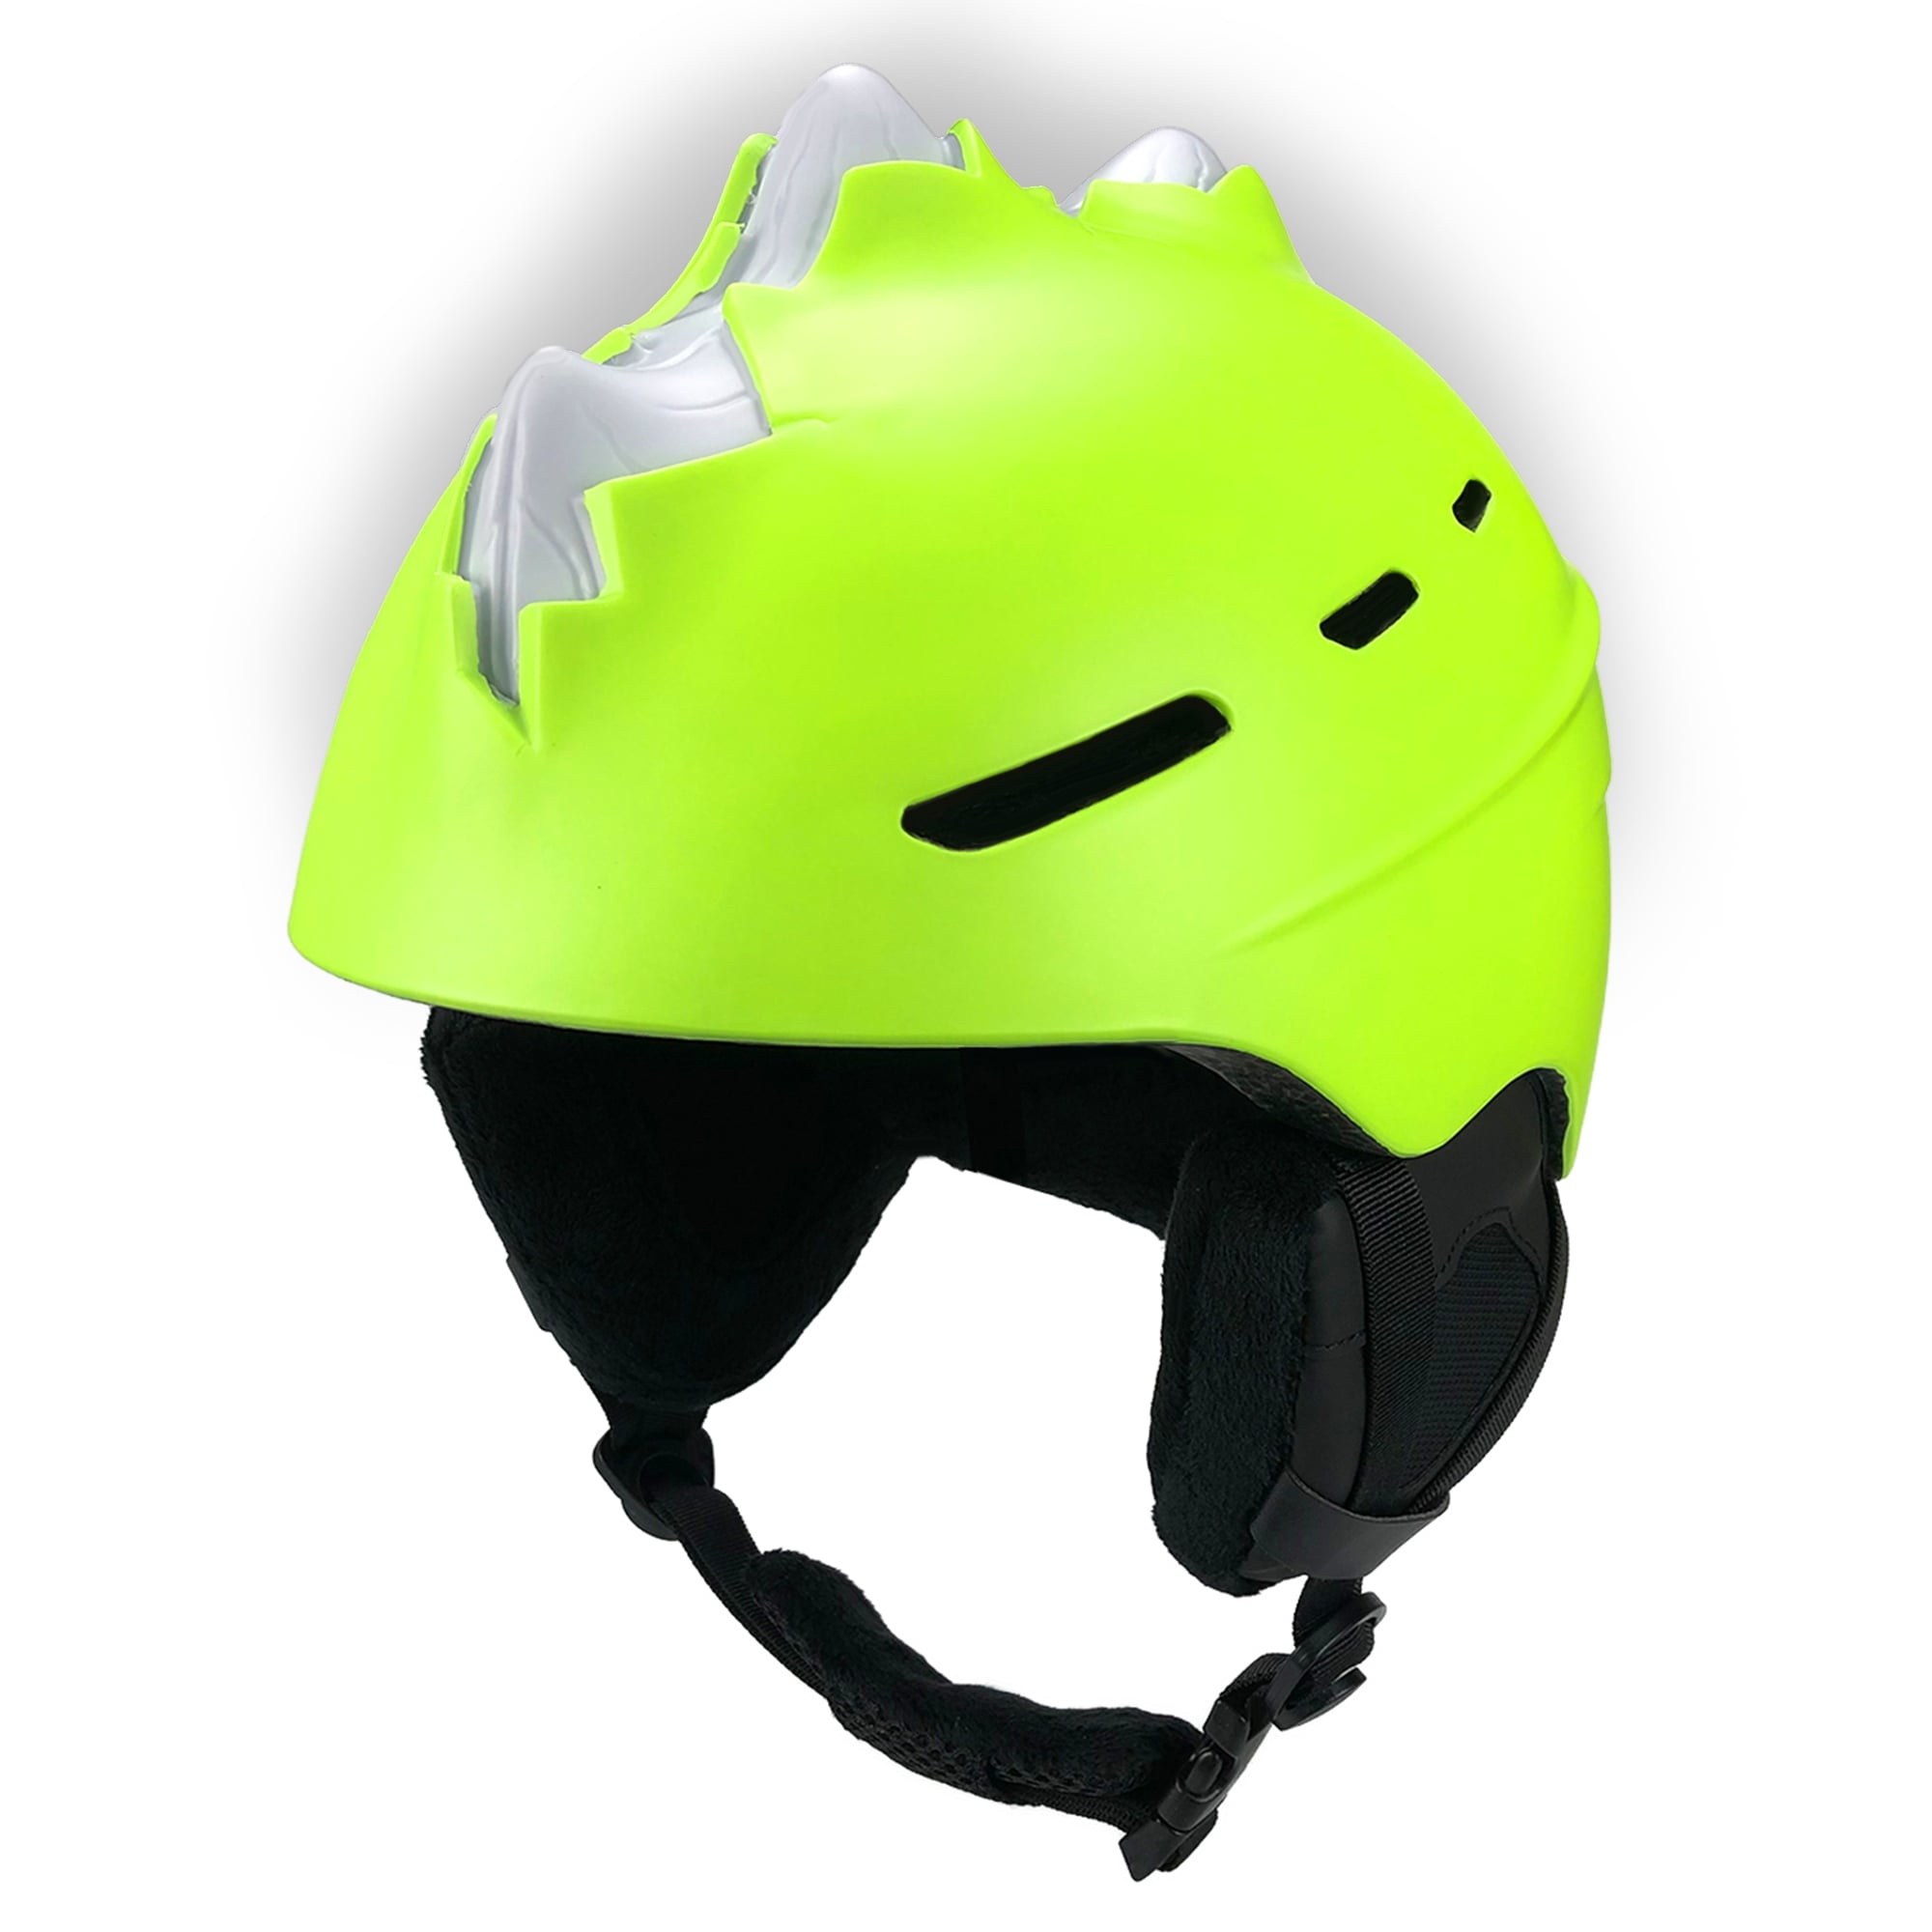 Bone Spike Ski Helmet - Black